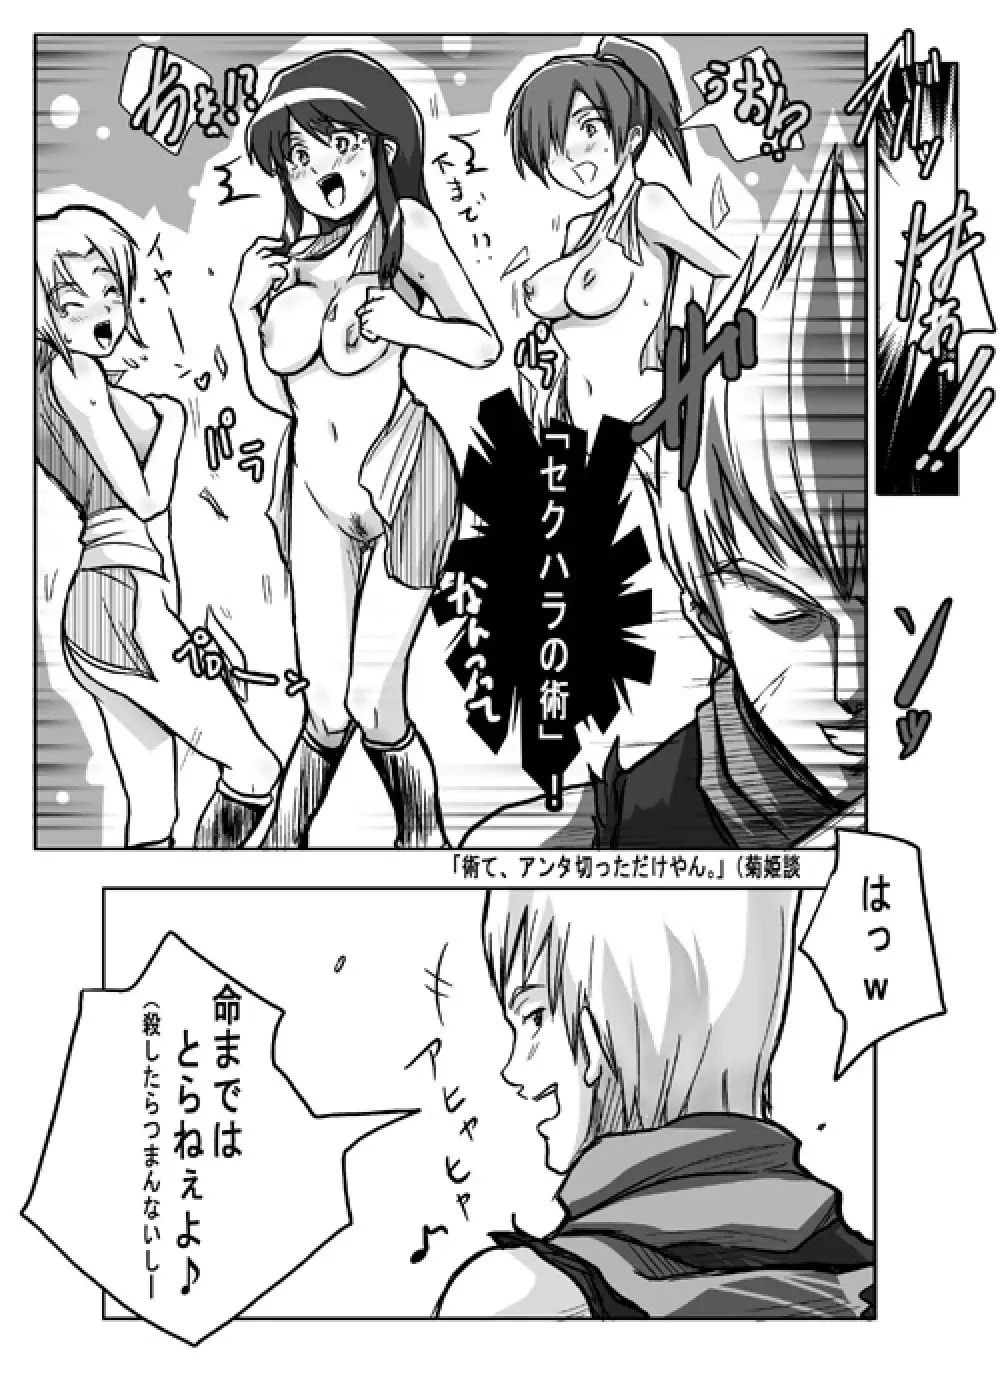 Same-themed manga about kid fighting female ninjas from japanese imageboard. 53ページ